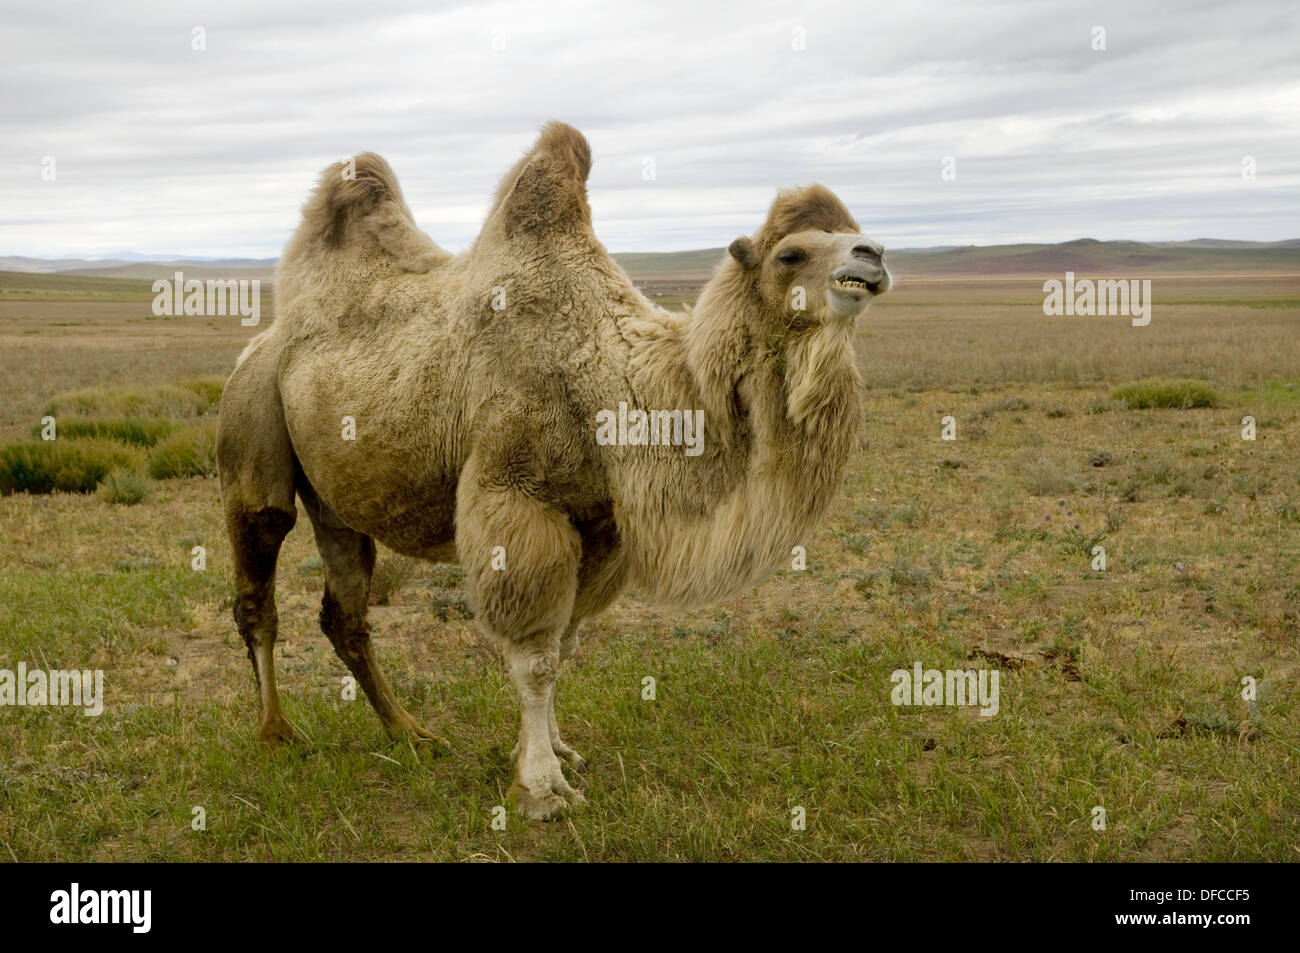 A Bactrian camel in the Gobi desert Stock Photo - Alamy